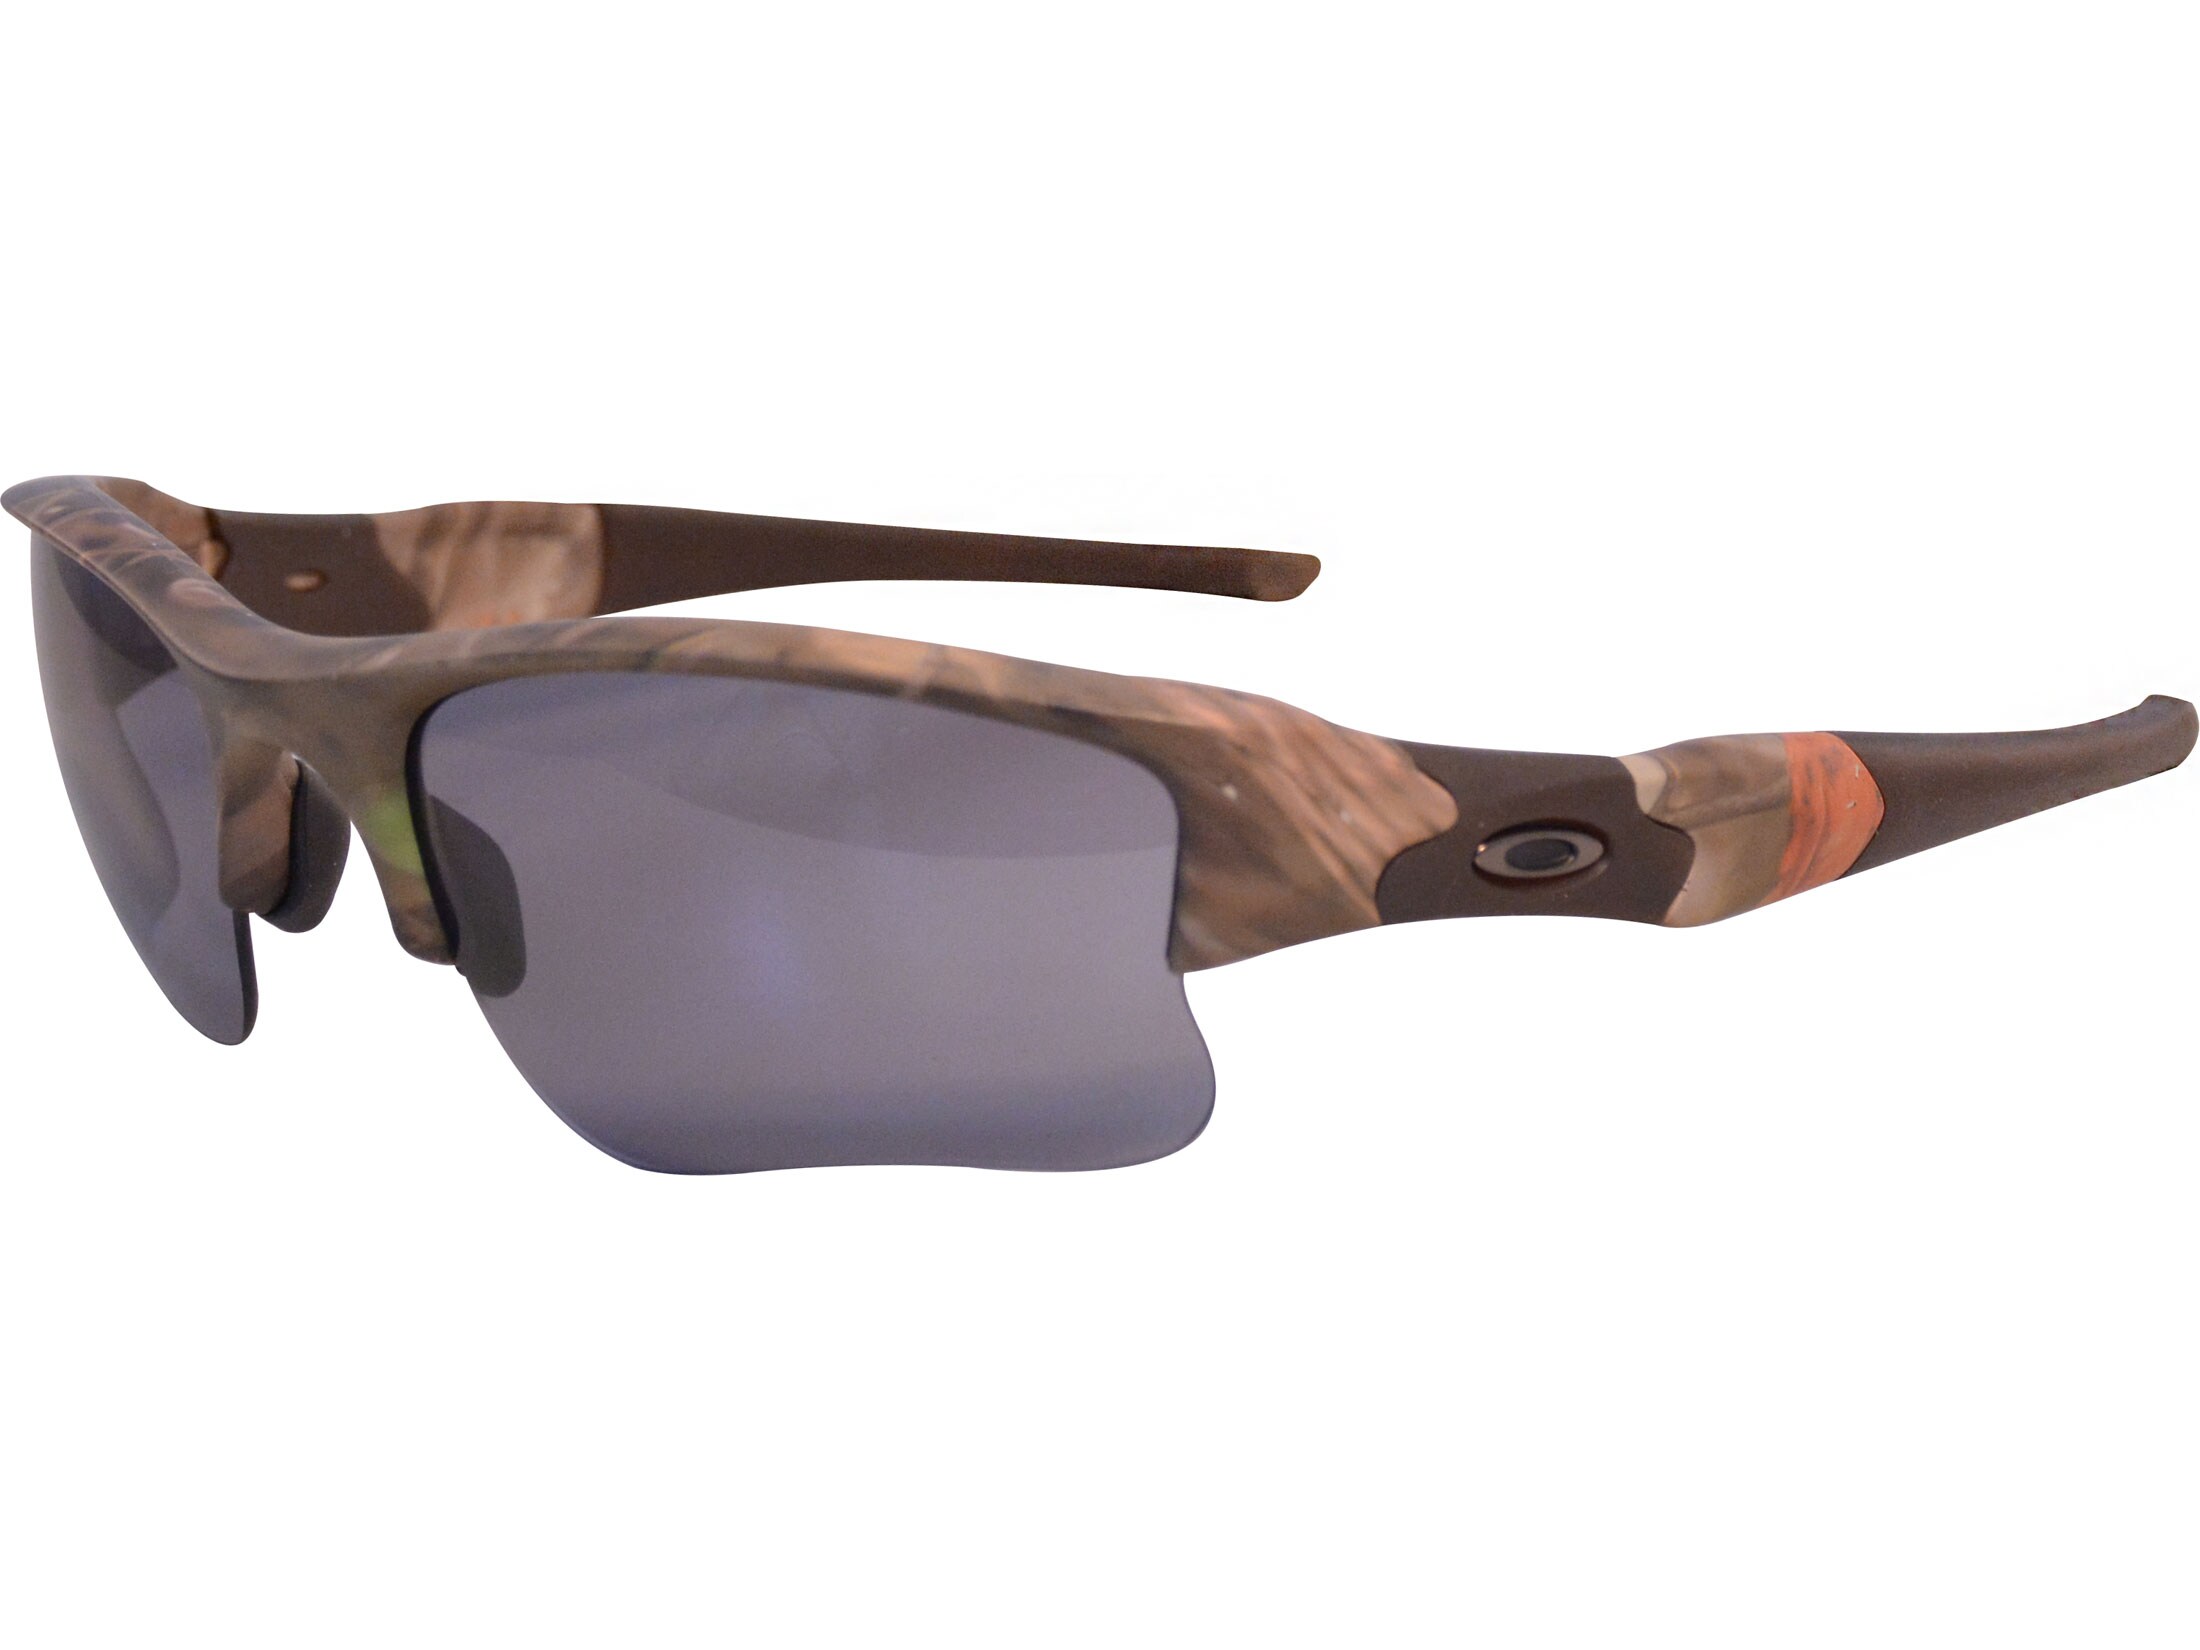 Oakley Flak Jacket XLJ Sunglasses Woodland Camo Frame/Gray Lens